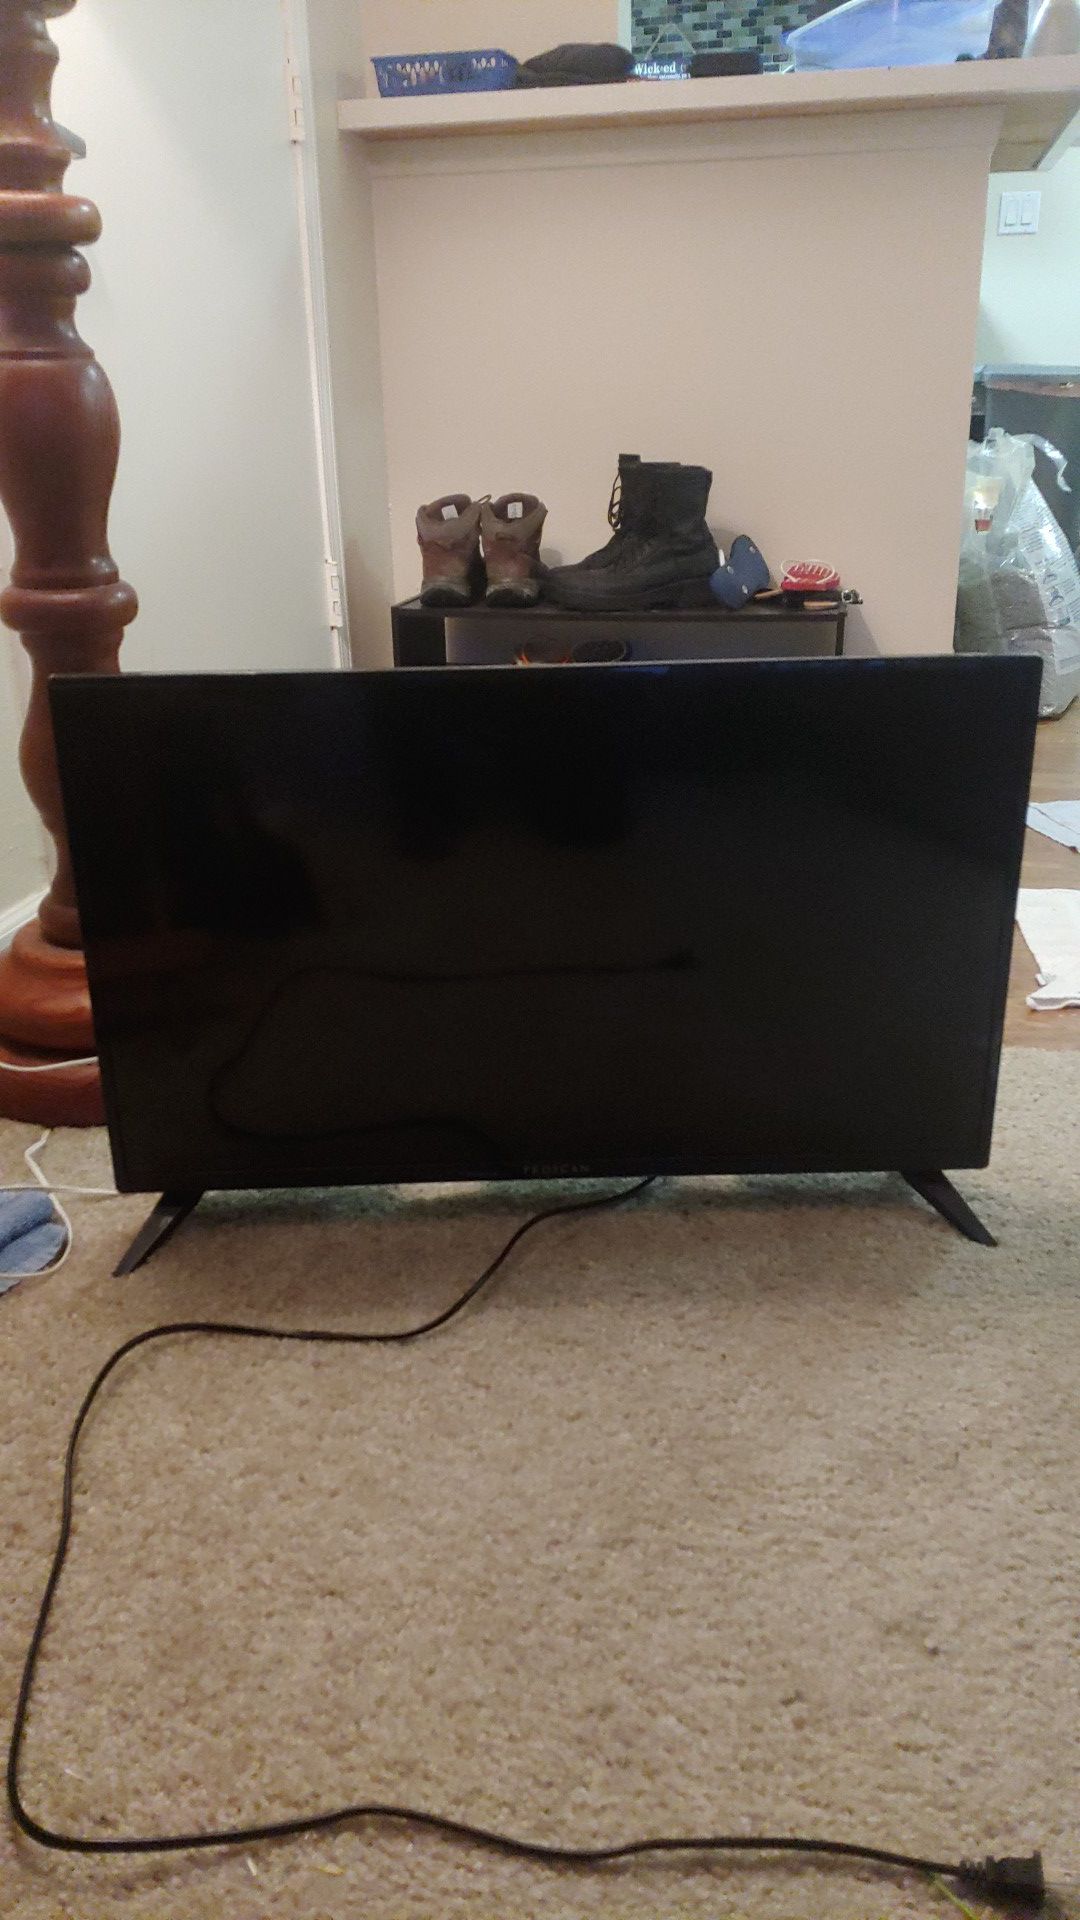 Proscan flatscreen tv 32 inch like new